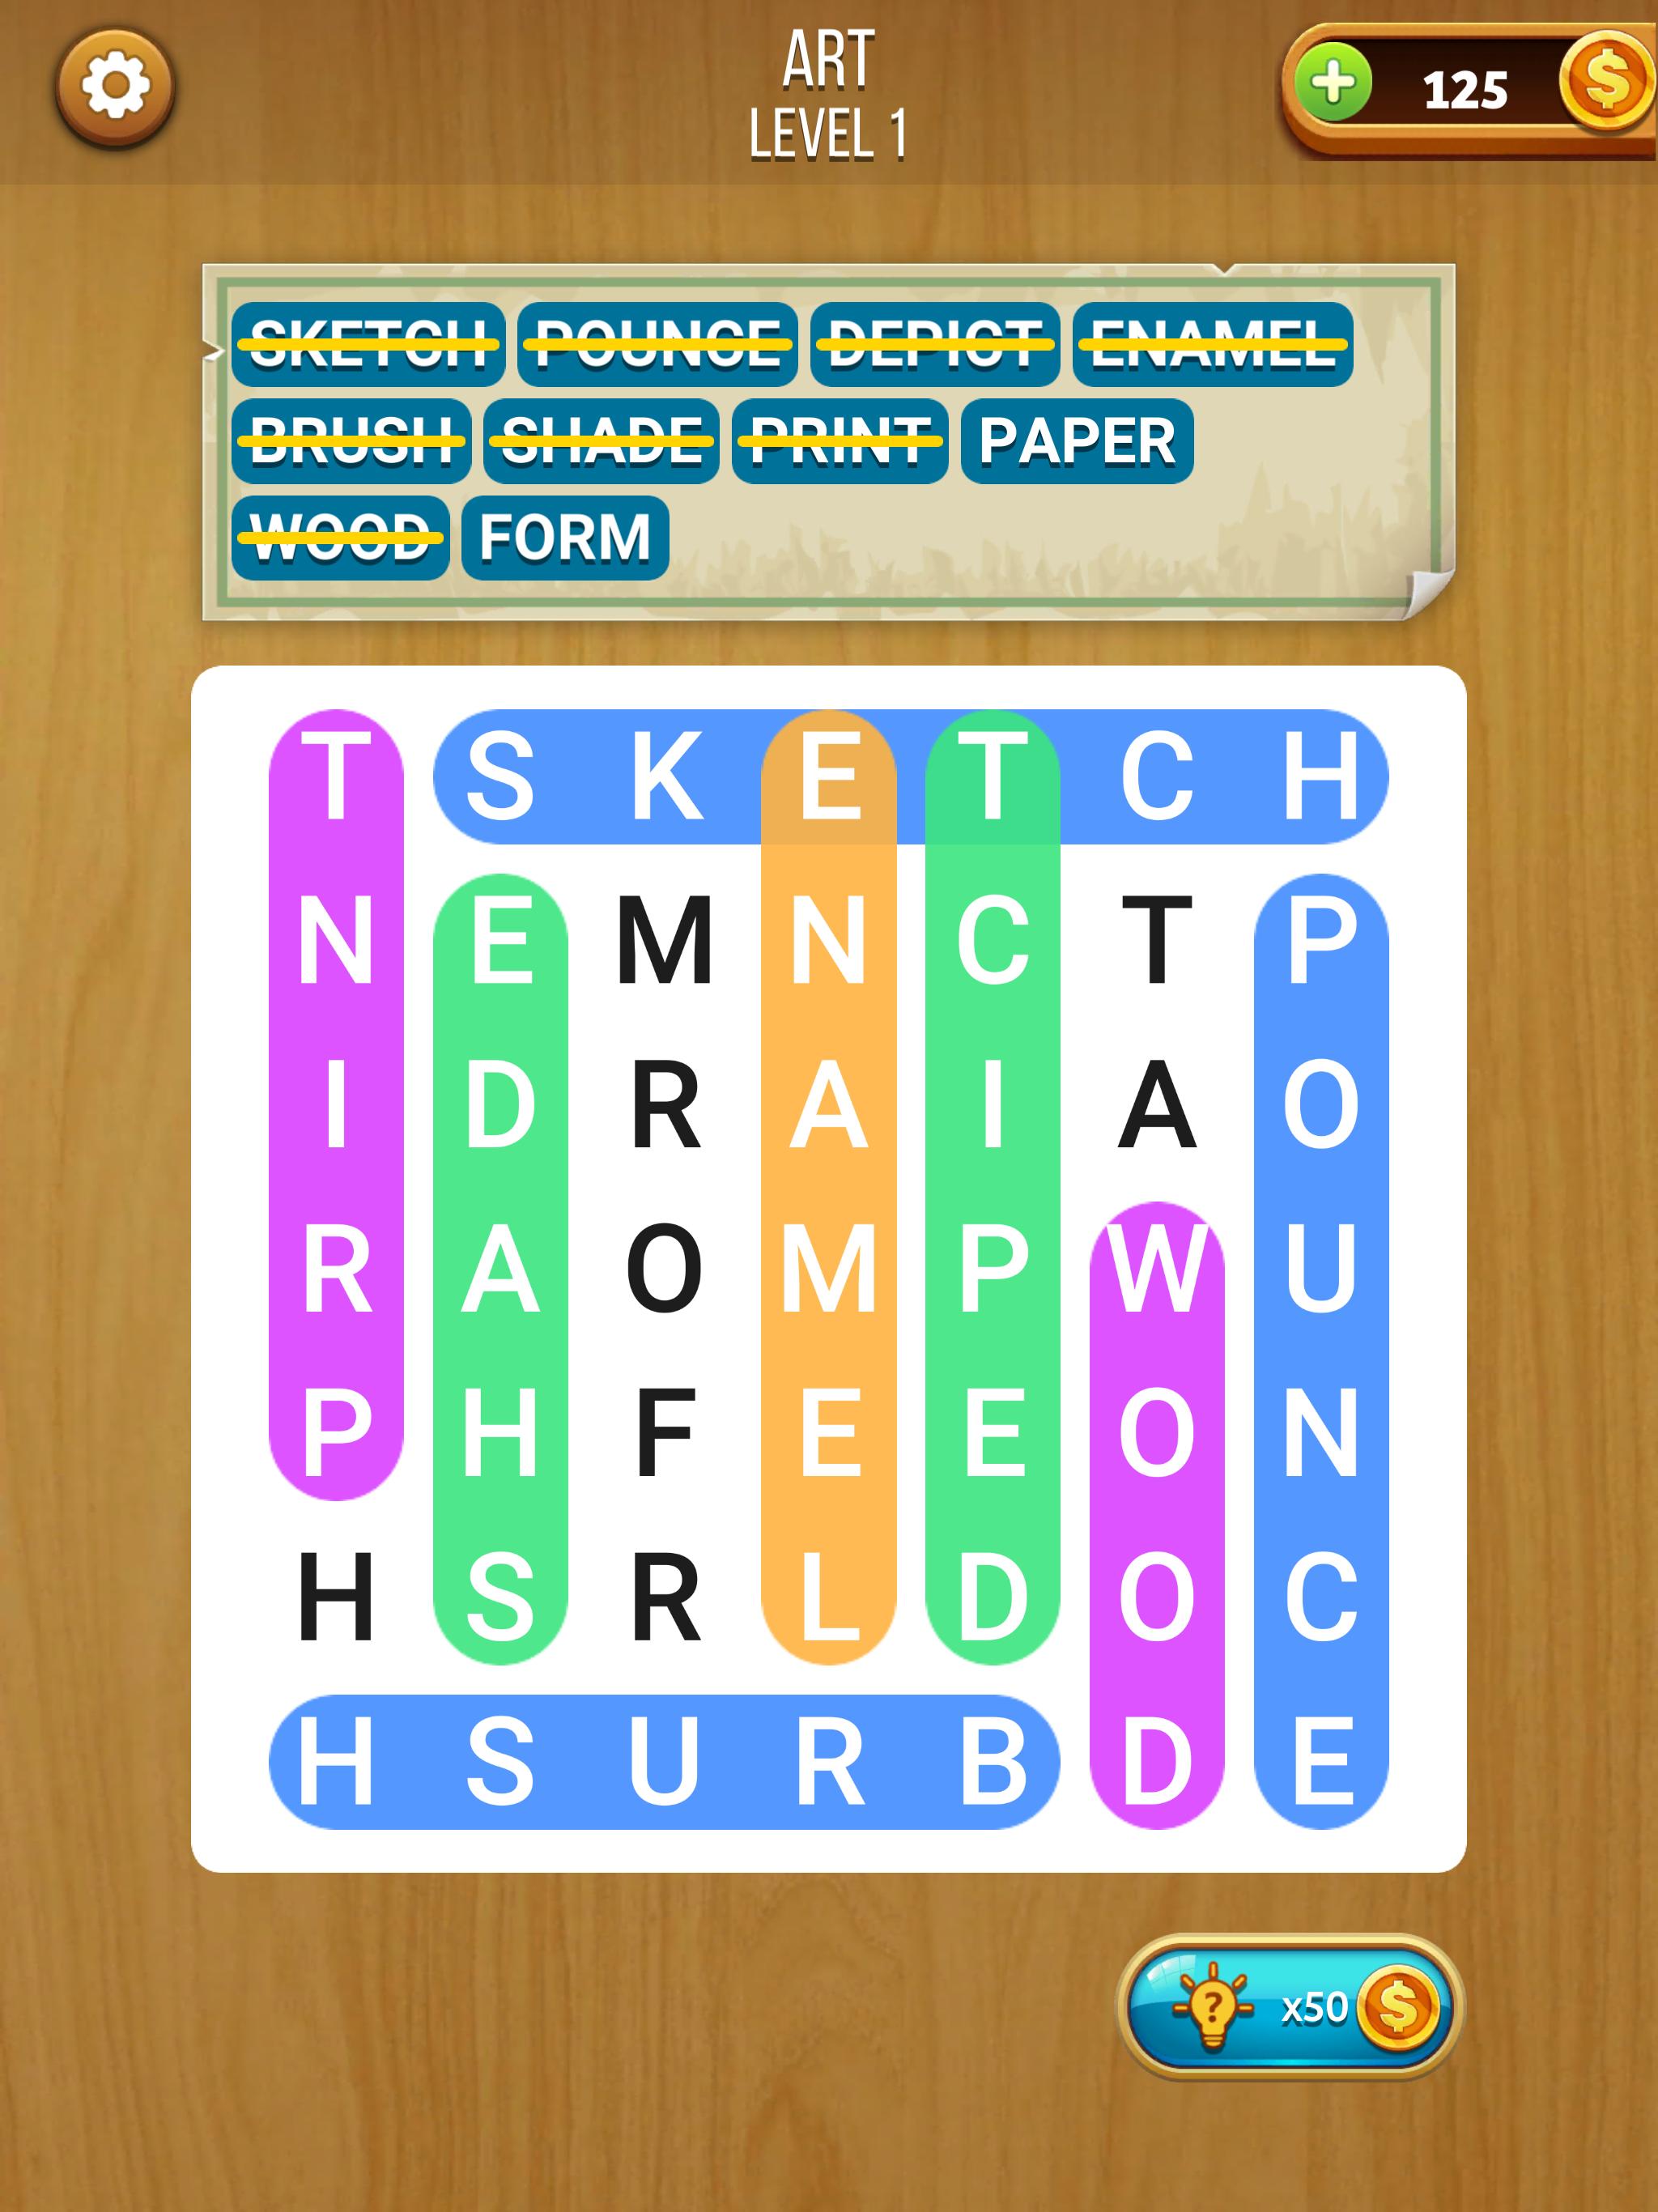 Hidden Words Word Search CrossWord Fun Game 1.0.1 Screenshot 7